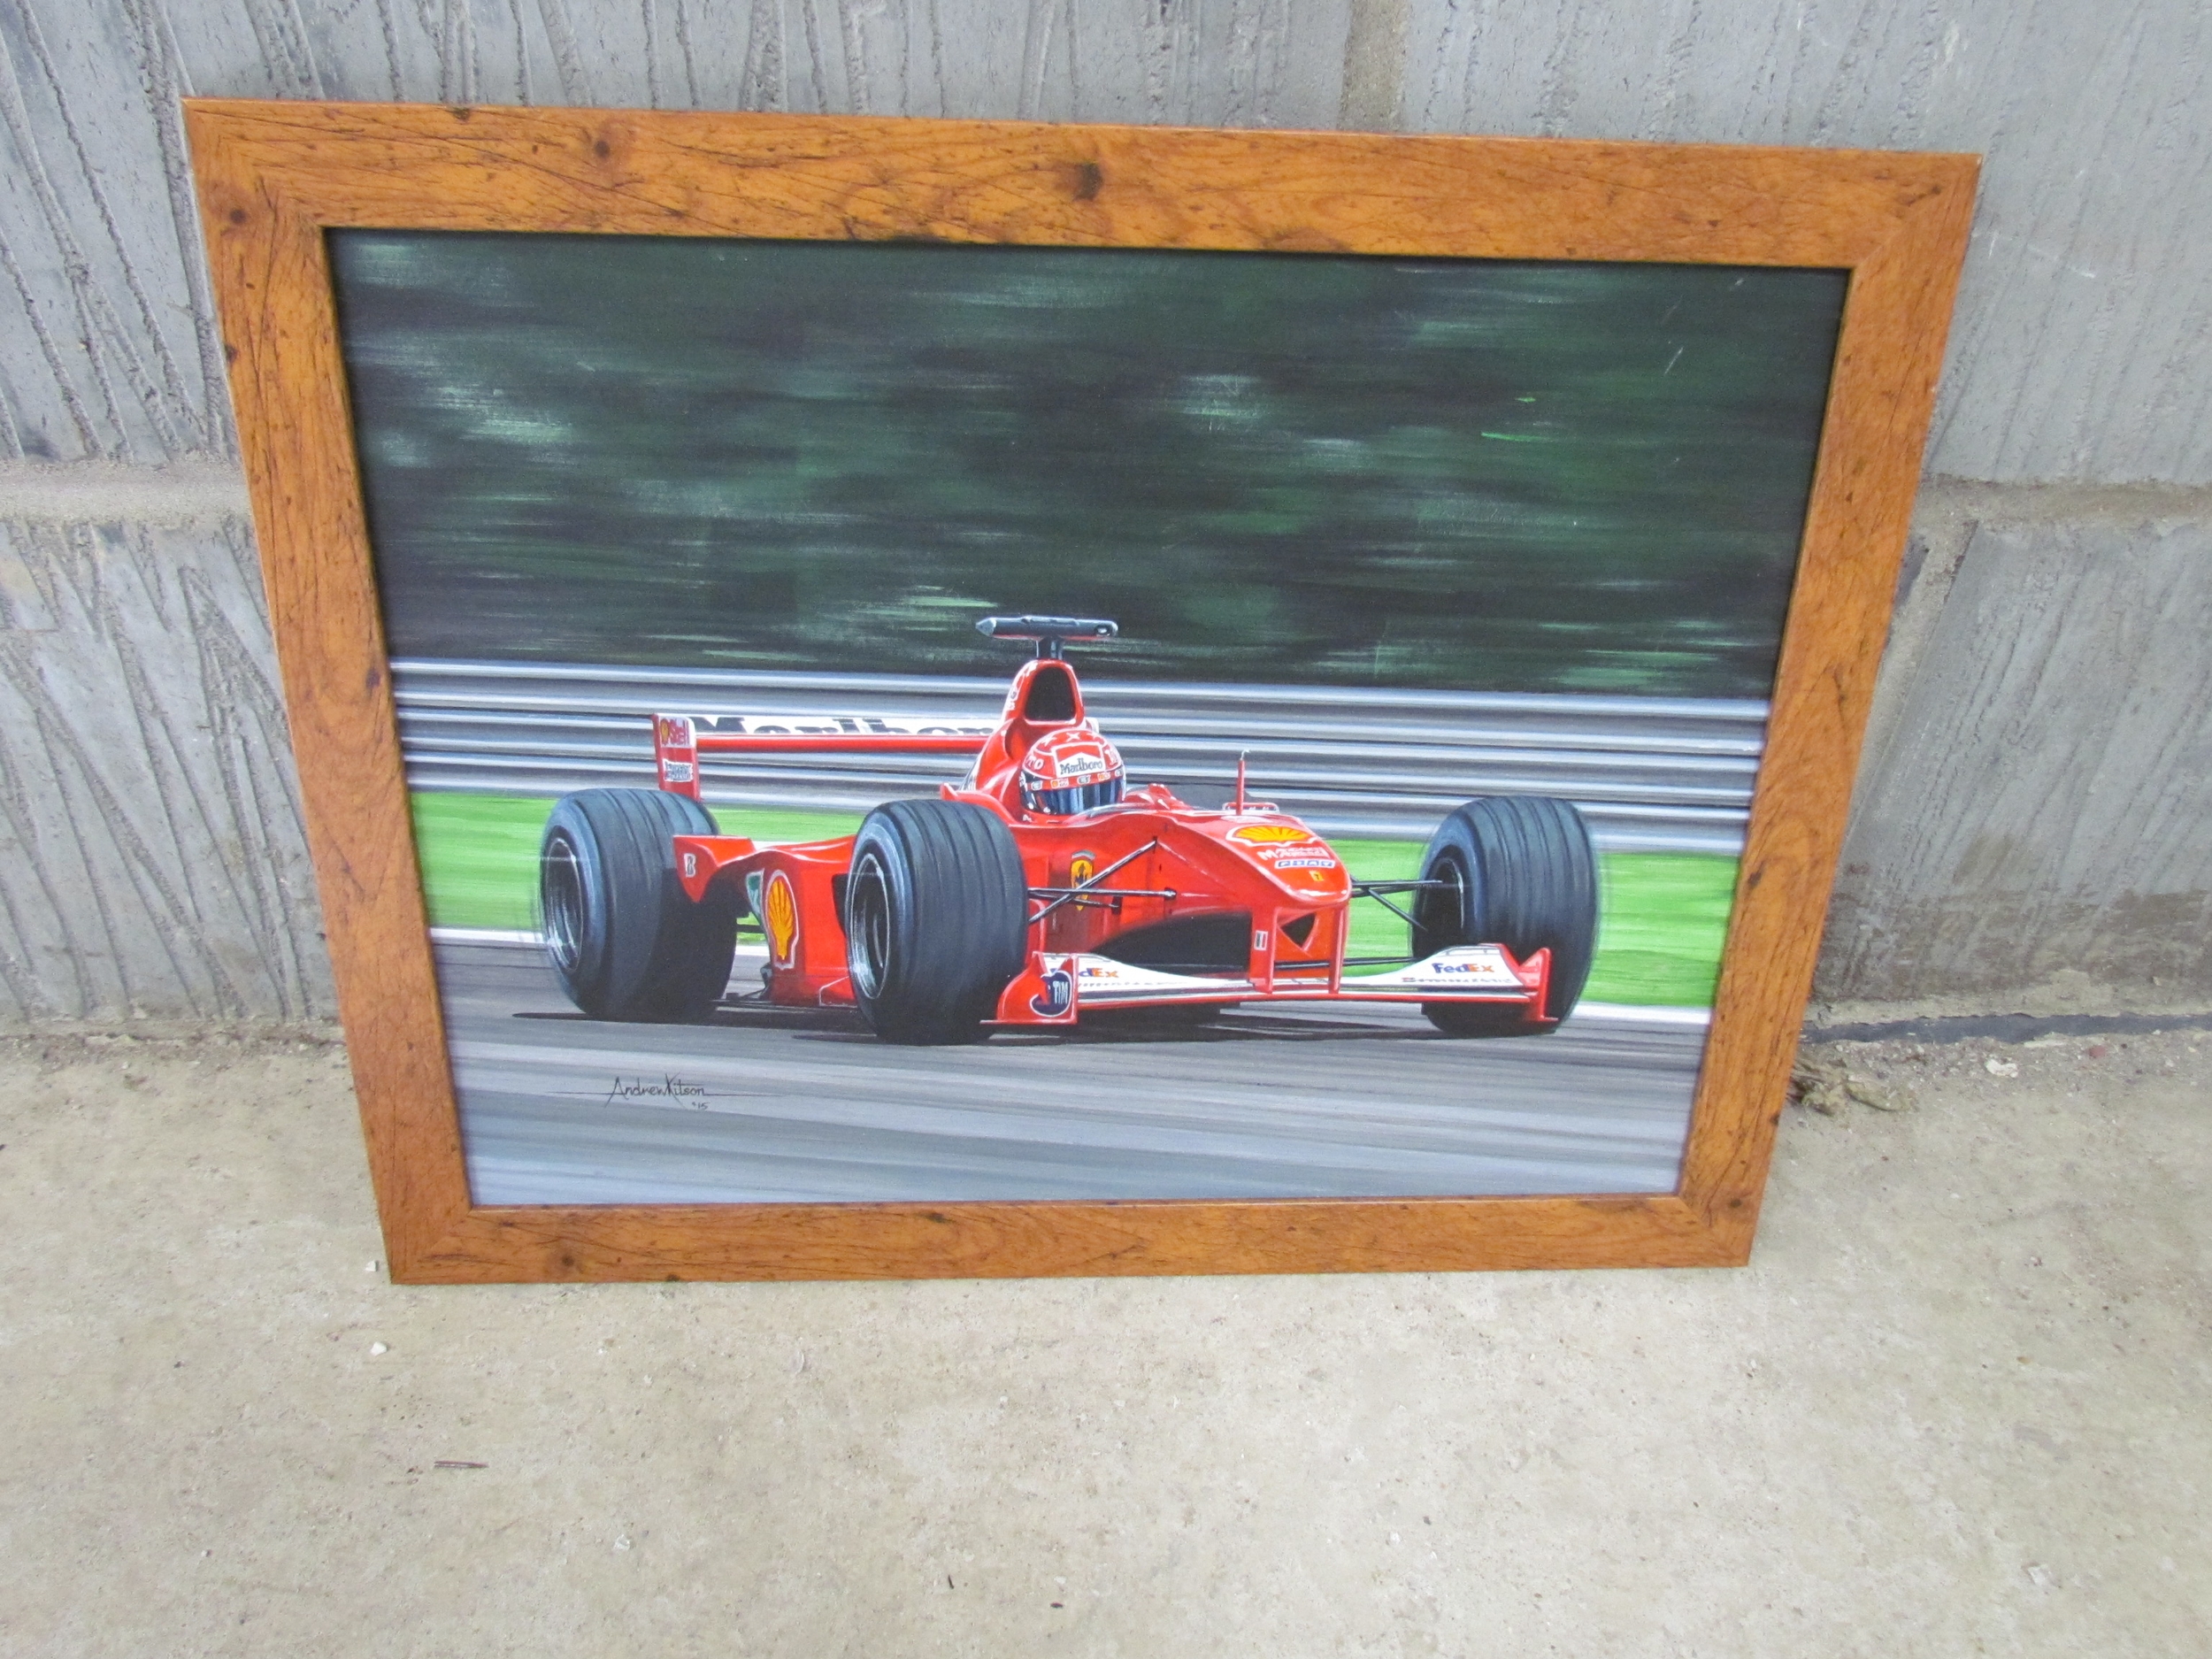 ANDREW KITSON: Framed painting "Monza Maestro" Michael Schumacher at the 2000 Italian Grand Prix.